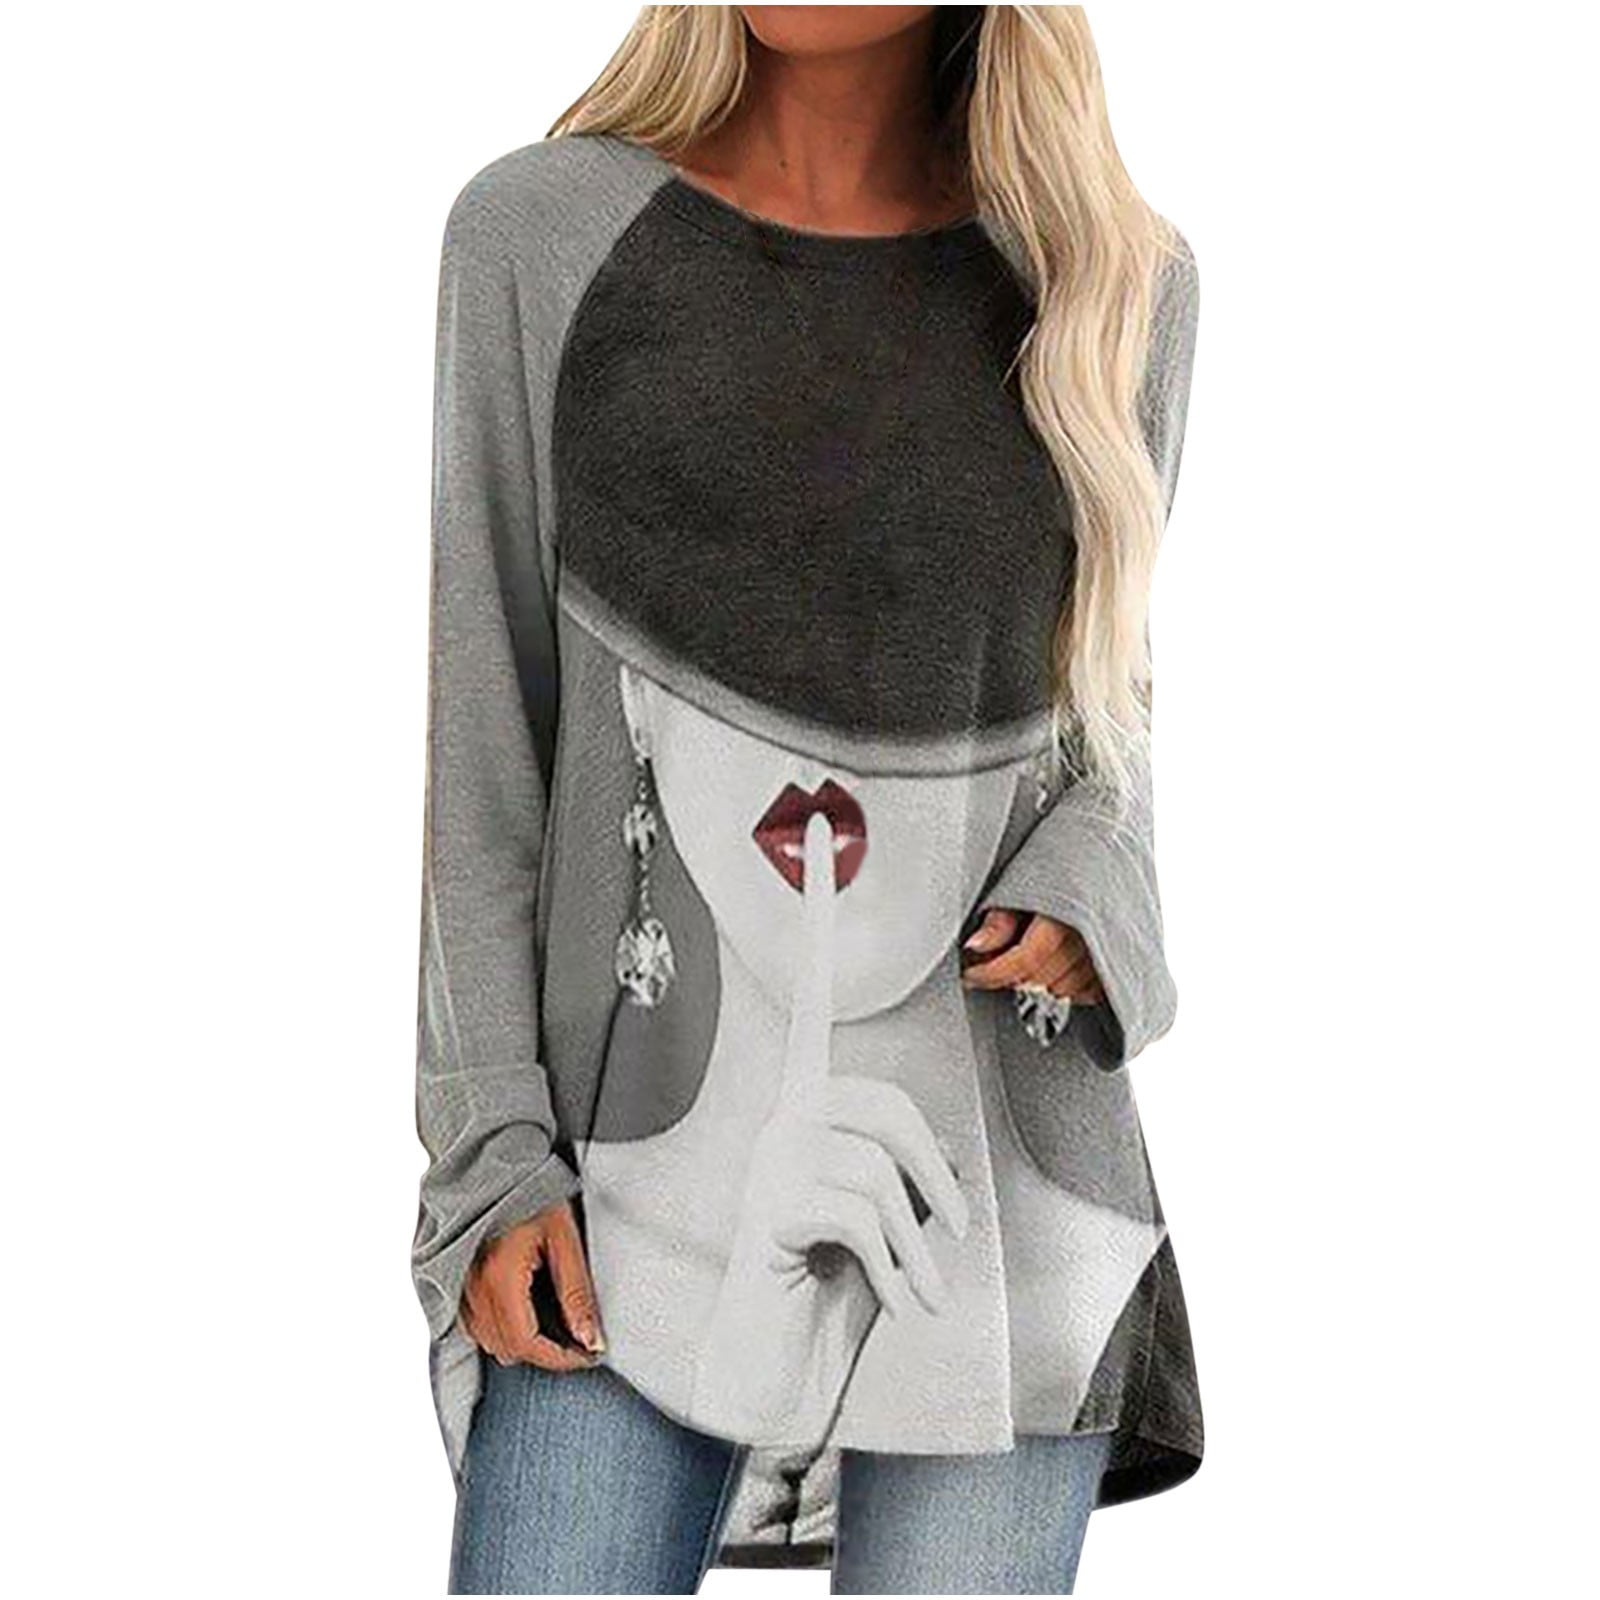 Womens Sweatshirts Casual Long Sleeve Crewneck Pullover Fashion Dandelion Hedgehog Print Shirts Tops Comfy Blouses 